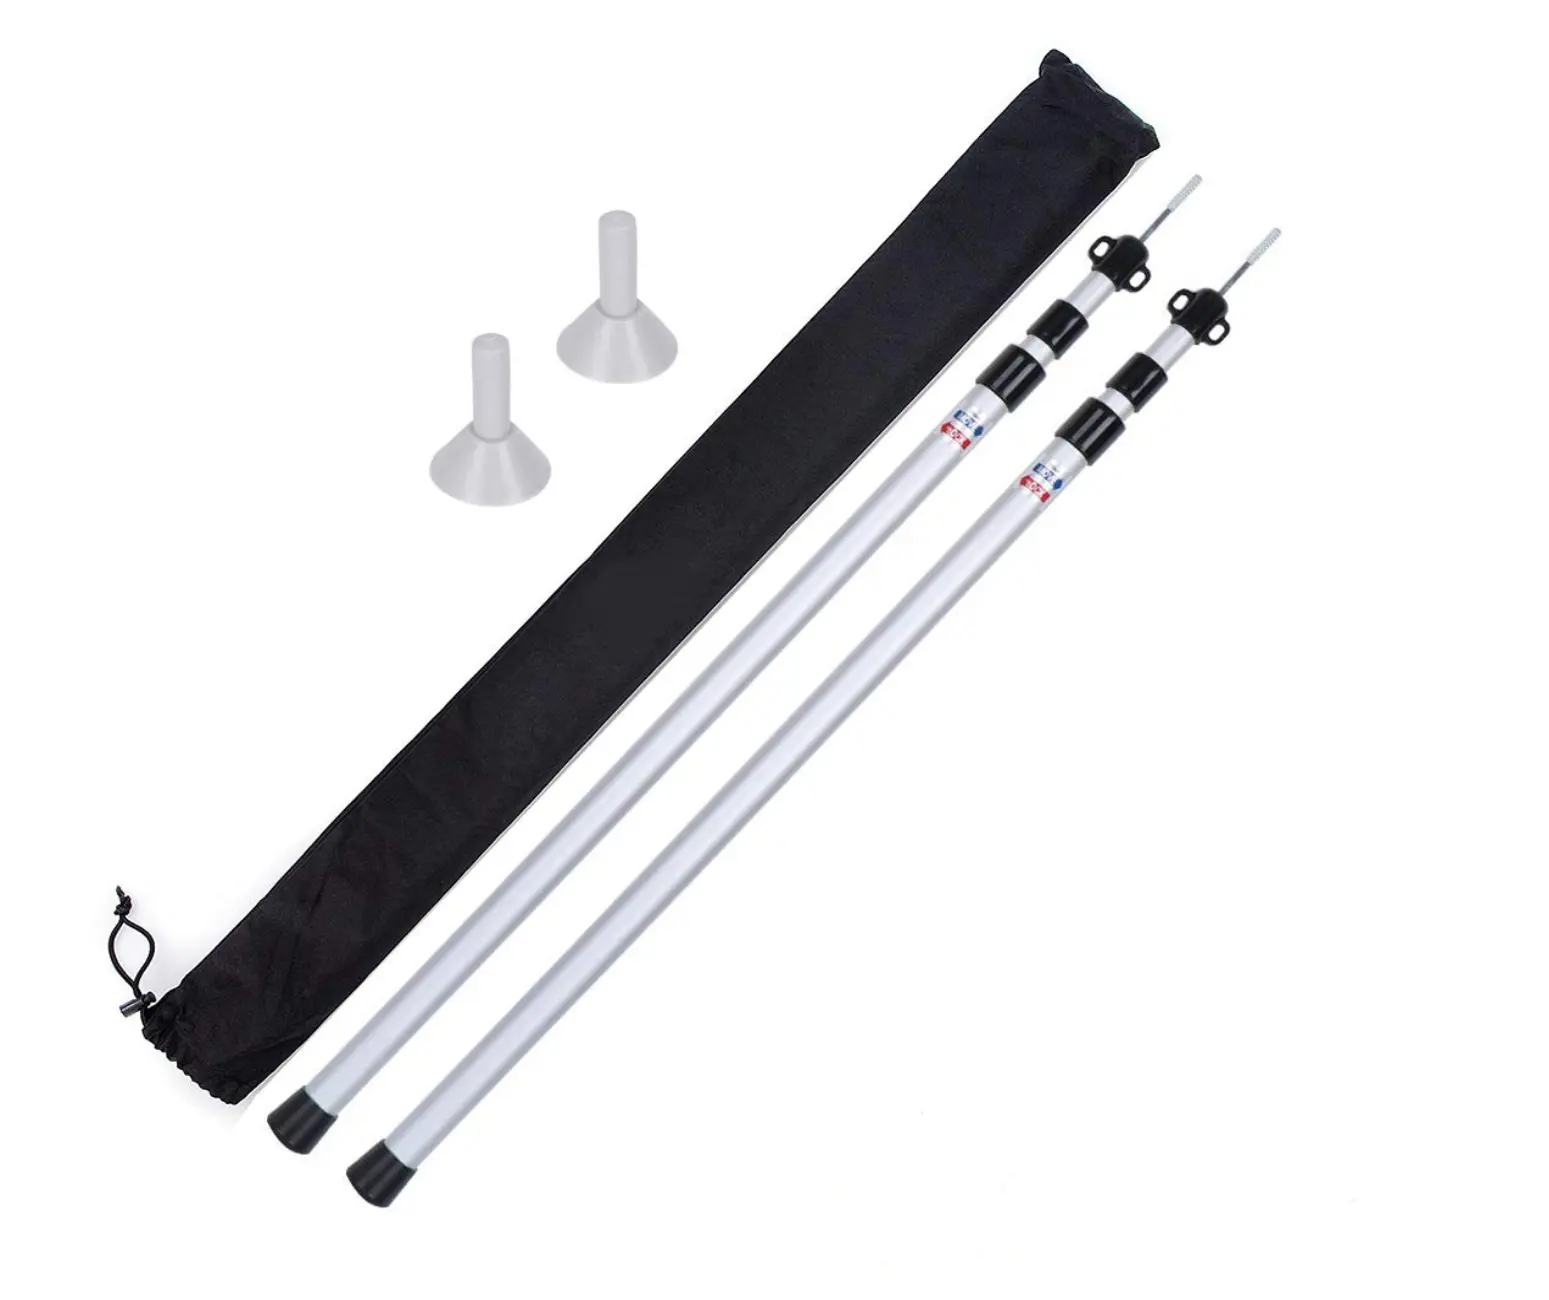 2 Pcs Adjustable Tarp Poles Telescoping Aluminum Rods Portable Awning Poles for Camping